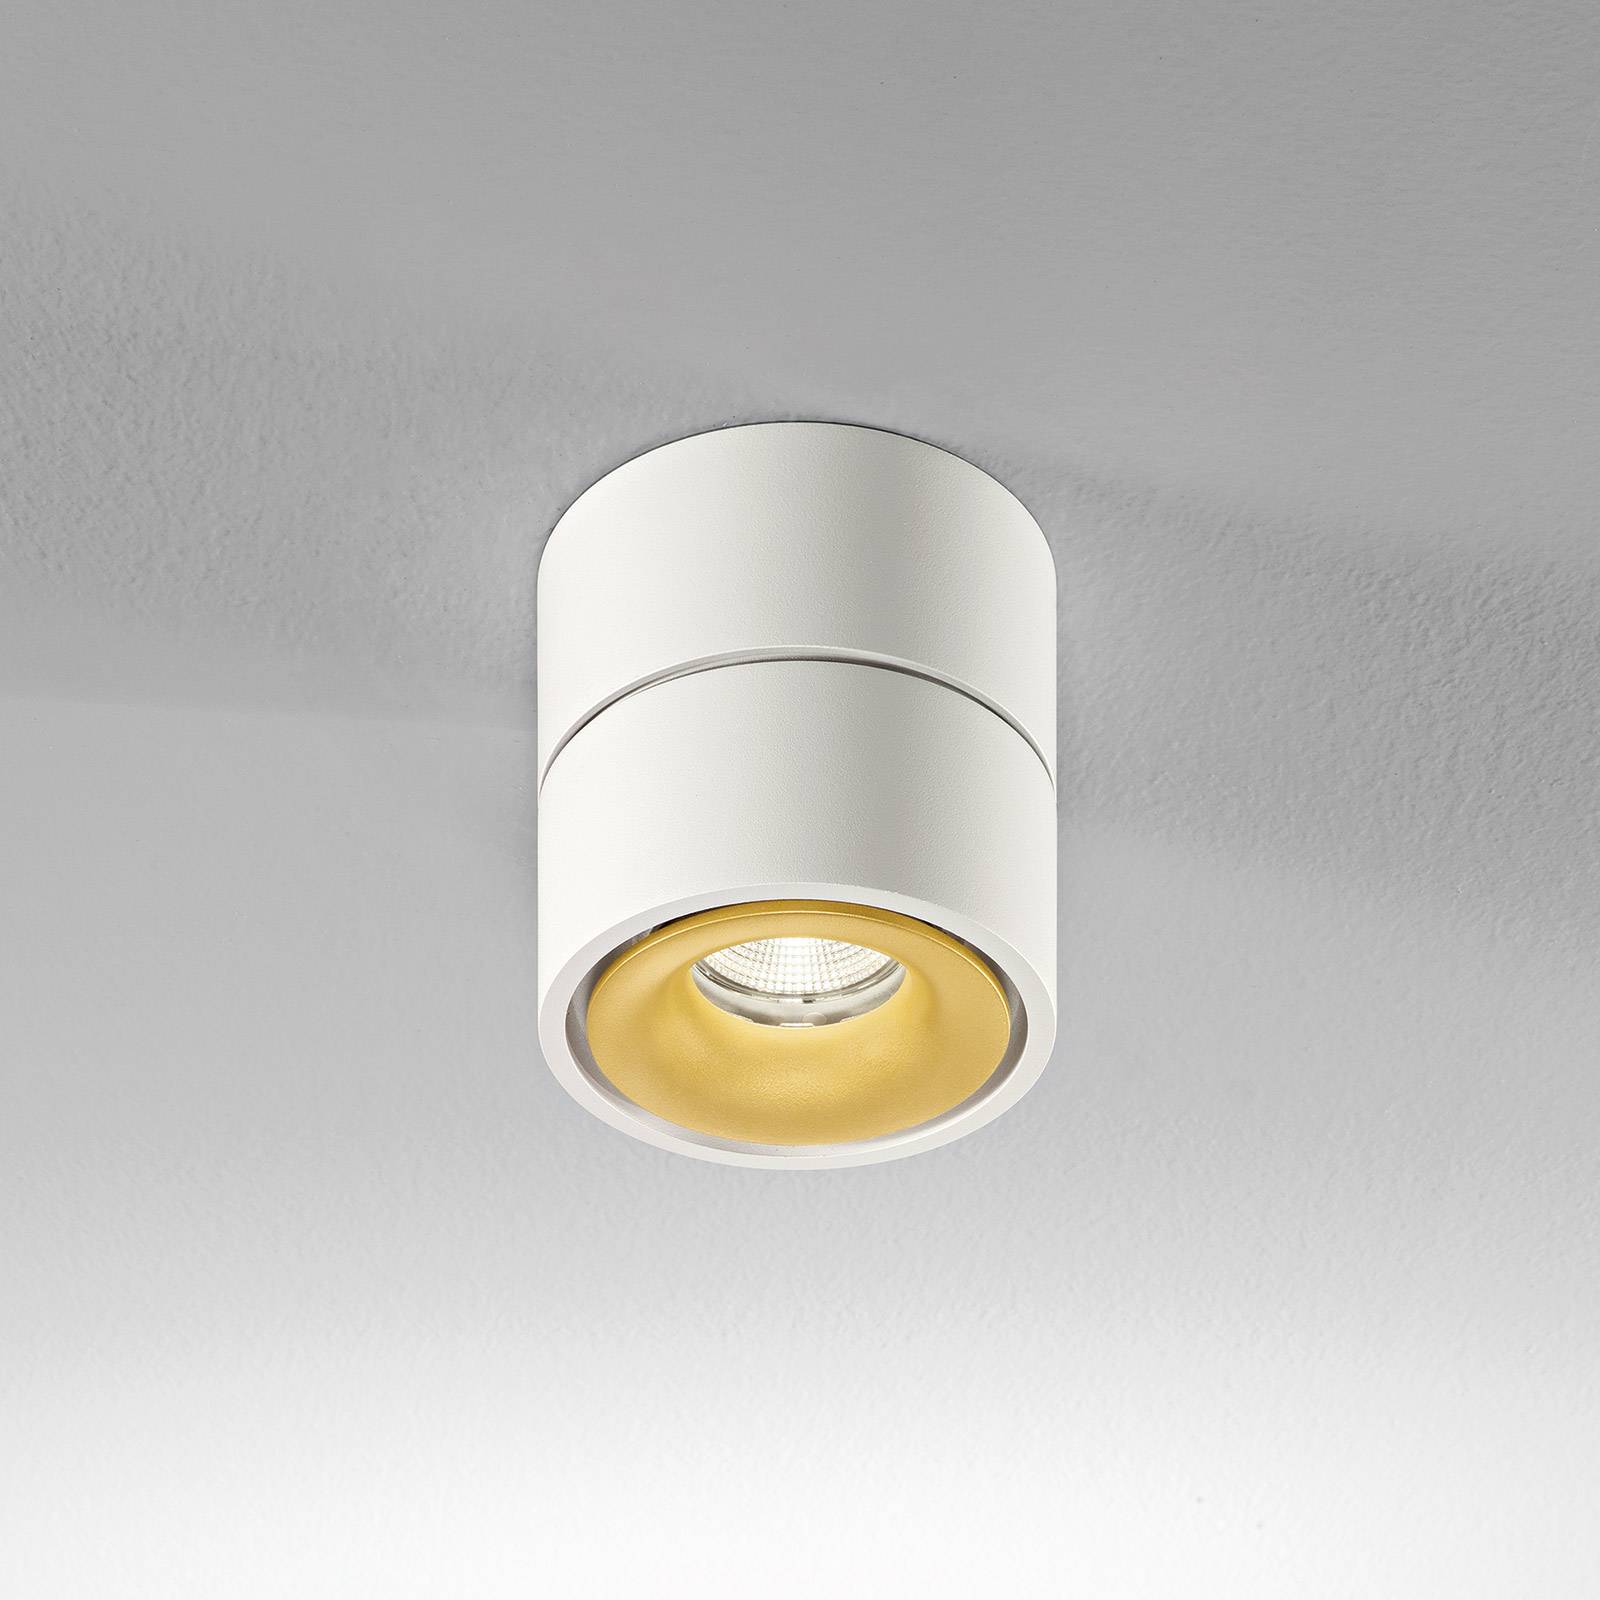 Egger Licht Egger Clippo LED-Deckenspot dim-to-warm weiß/gold